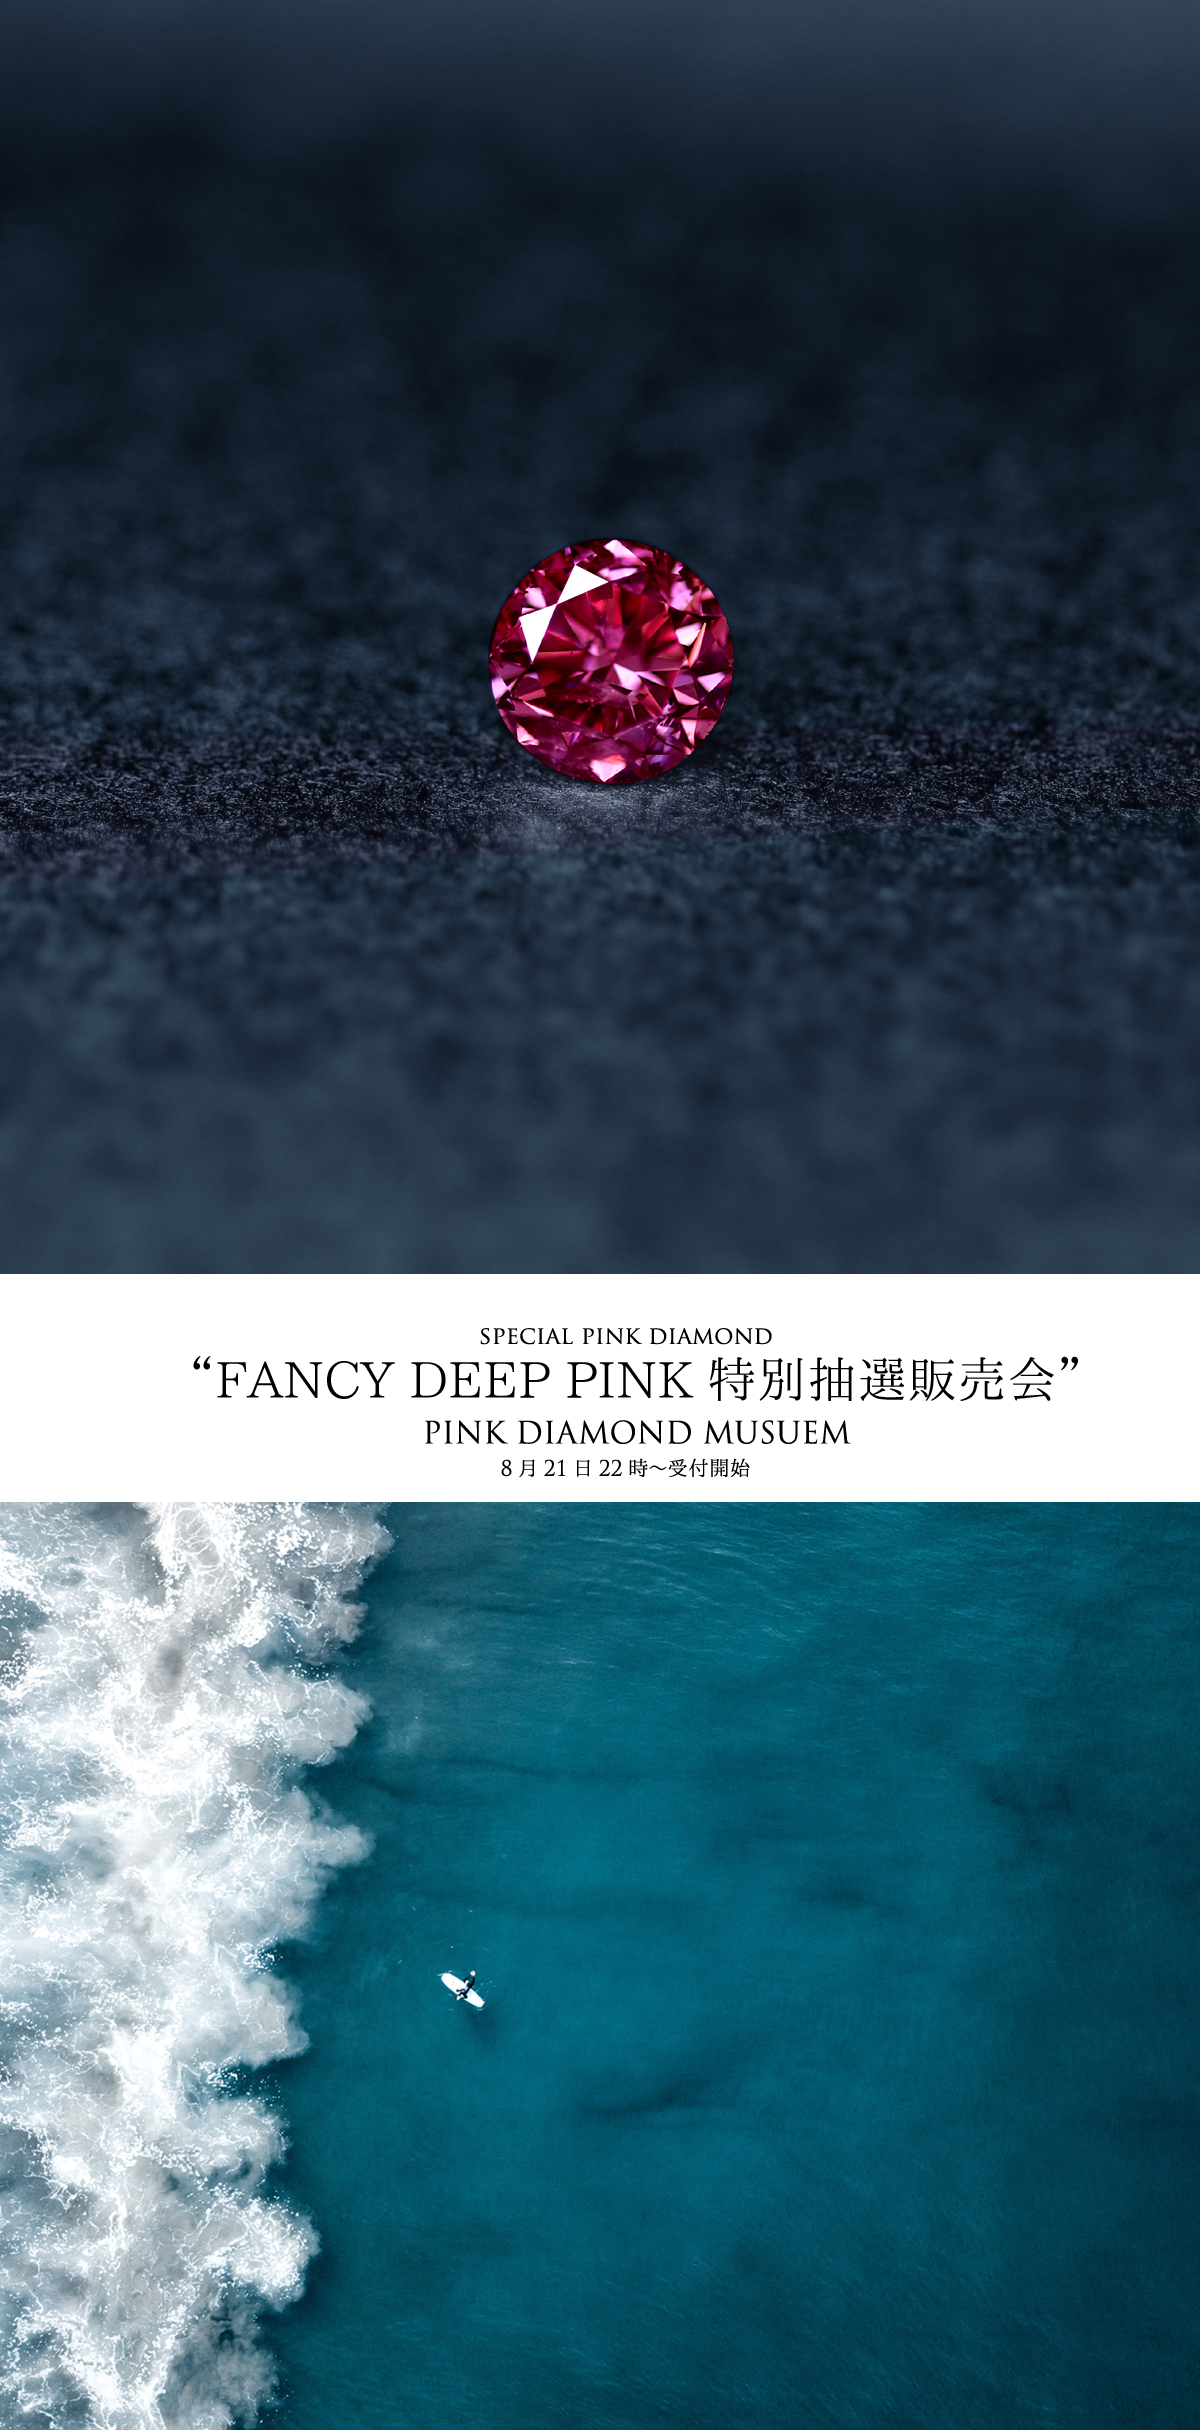 jewel planet 公式サイト / "FANCY DEEP PINK 0.277ct 特別抽選販売会"